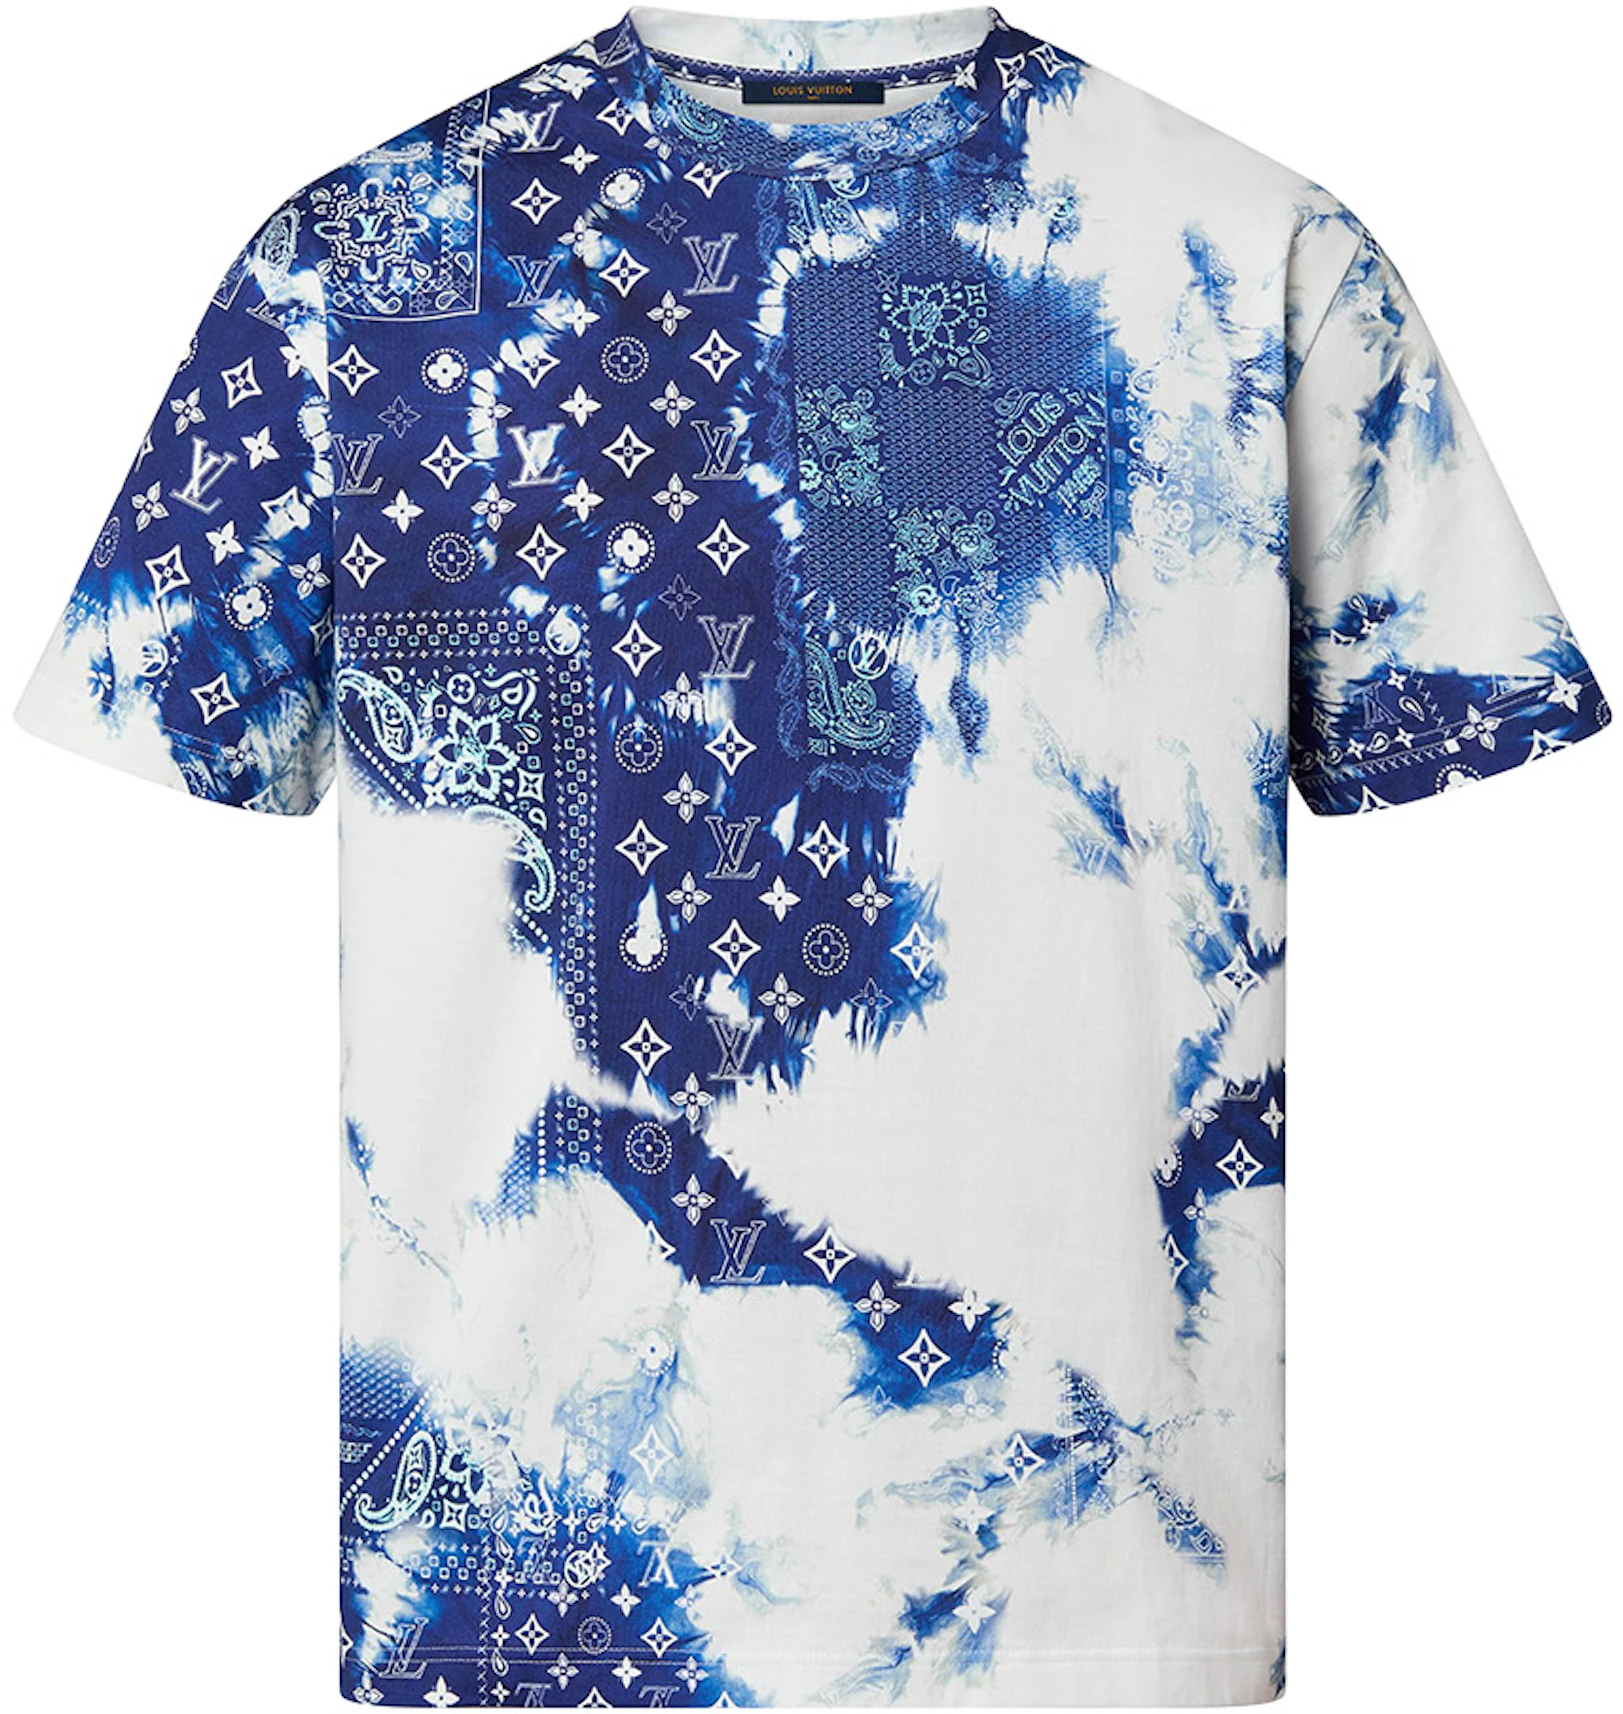 Louis Vuitton Monogram Bandana Printed T-Shirt Blue/White - - US